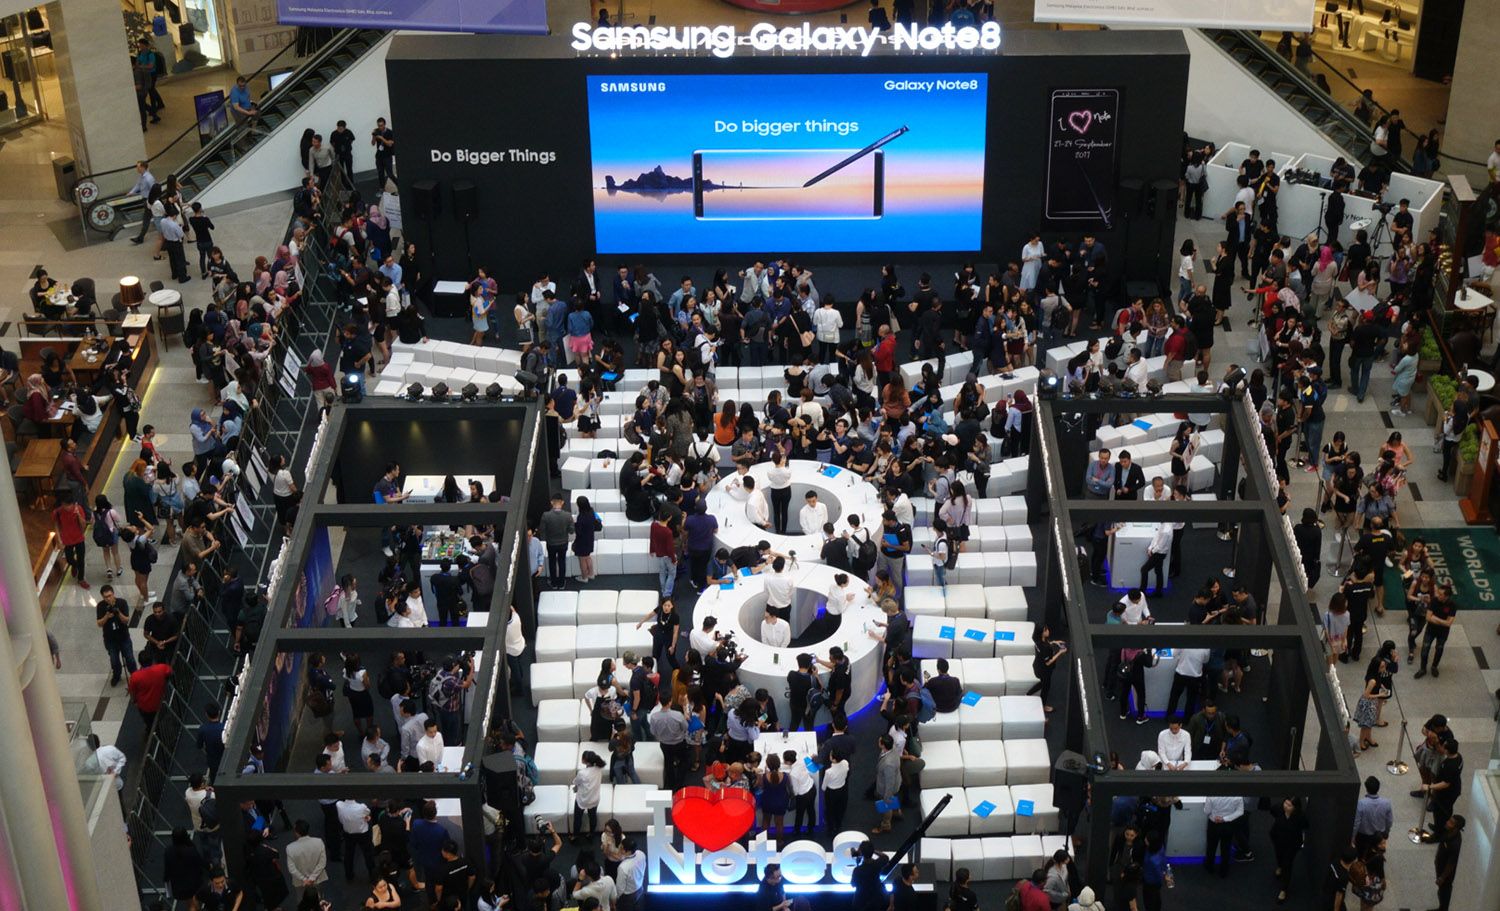 Samsung Galaxy Note 8 launch